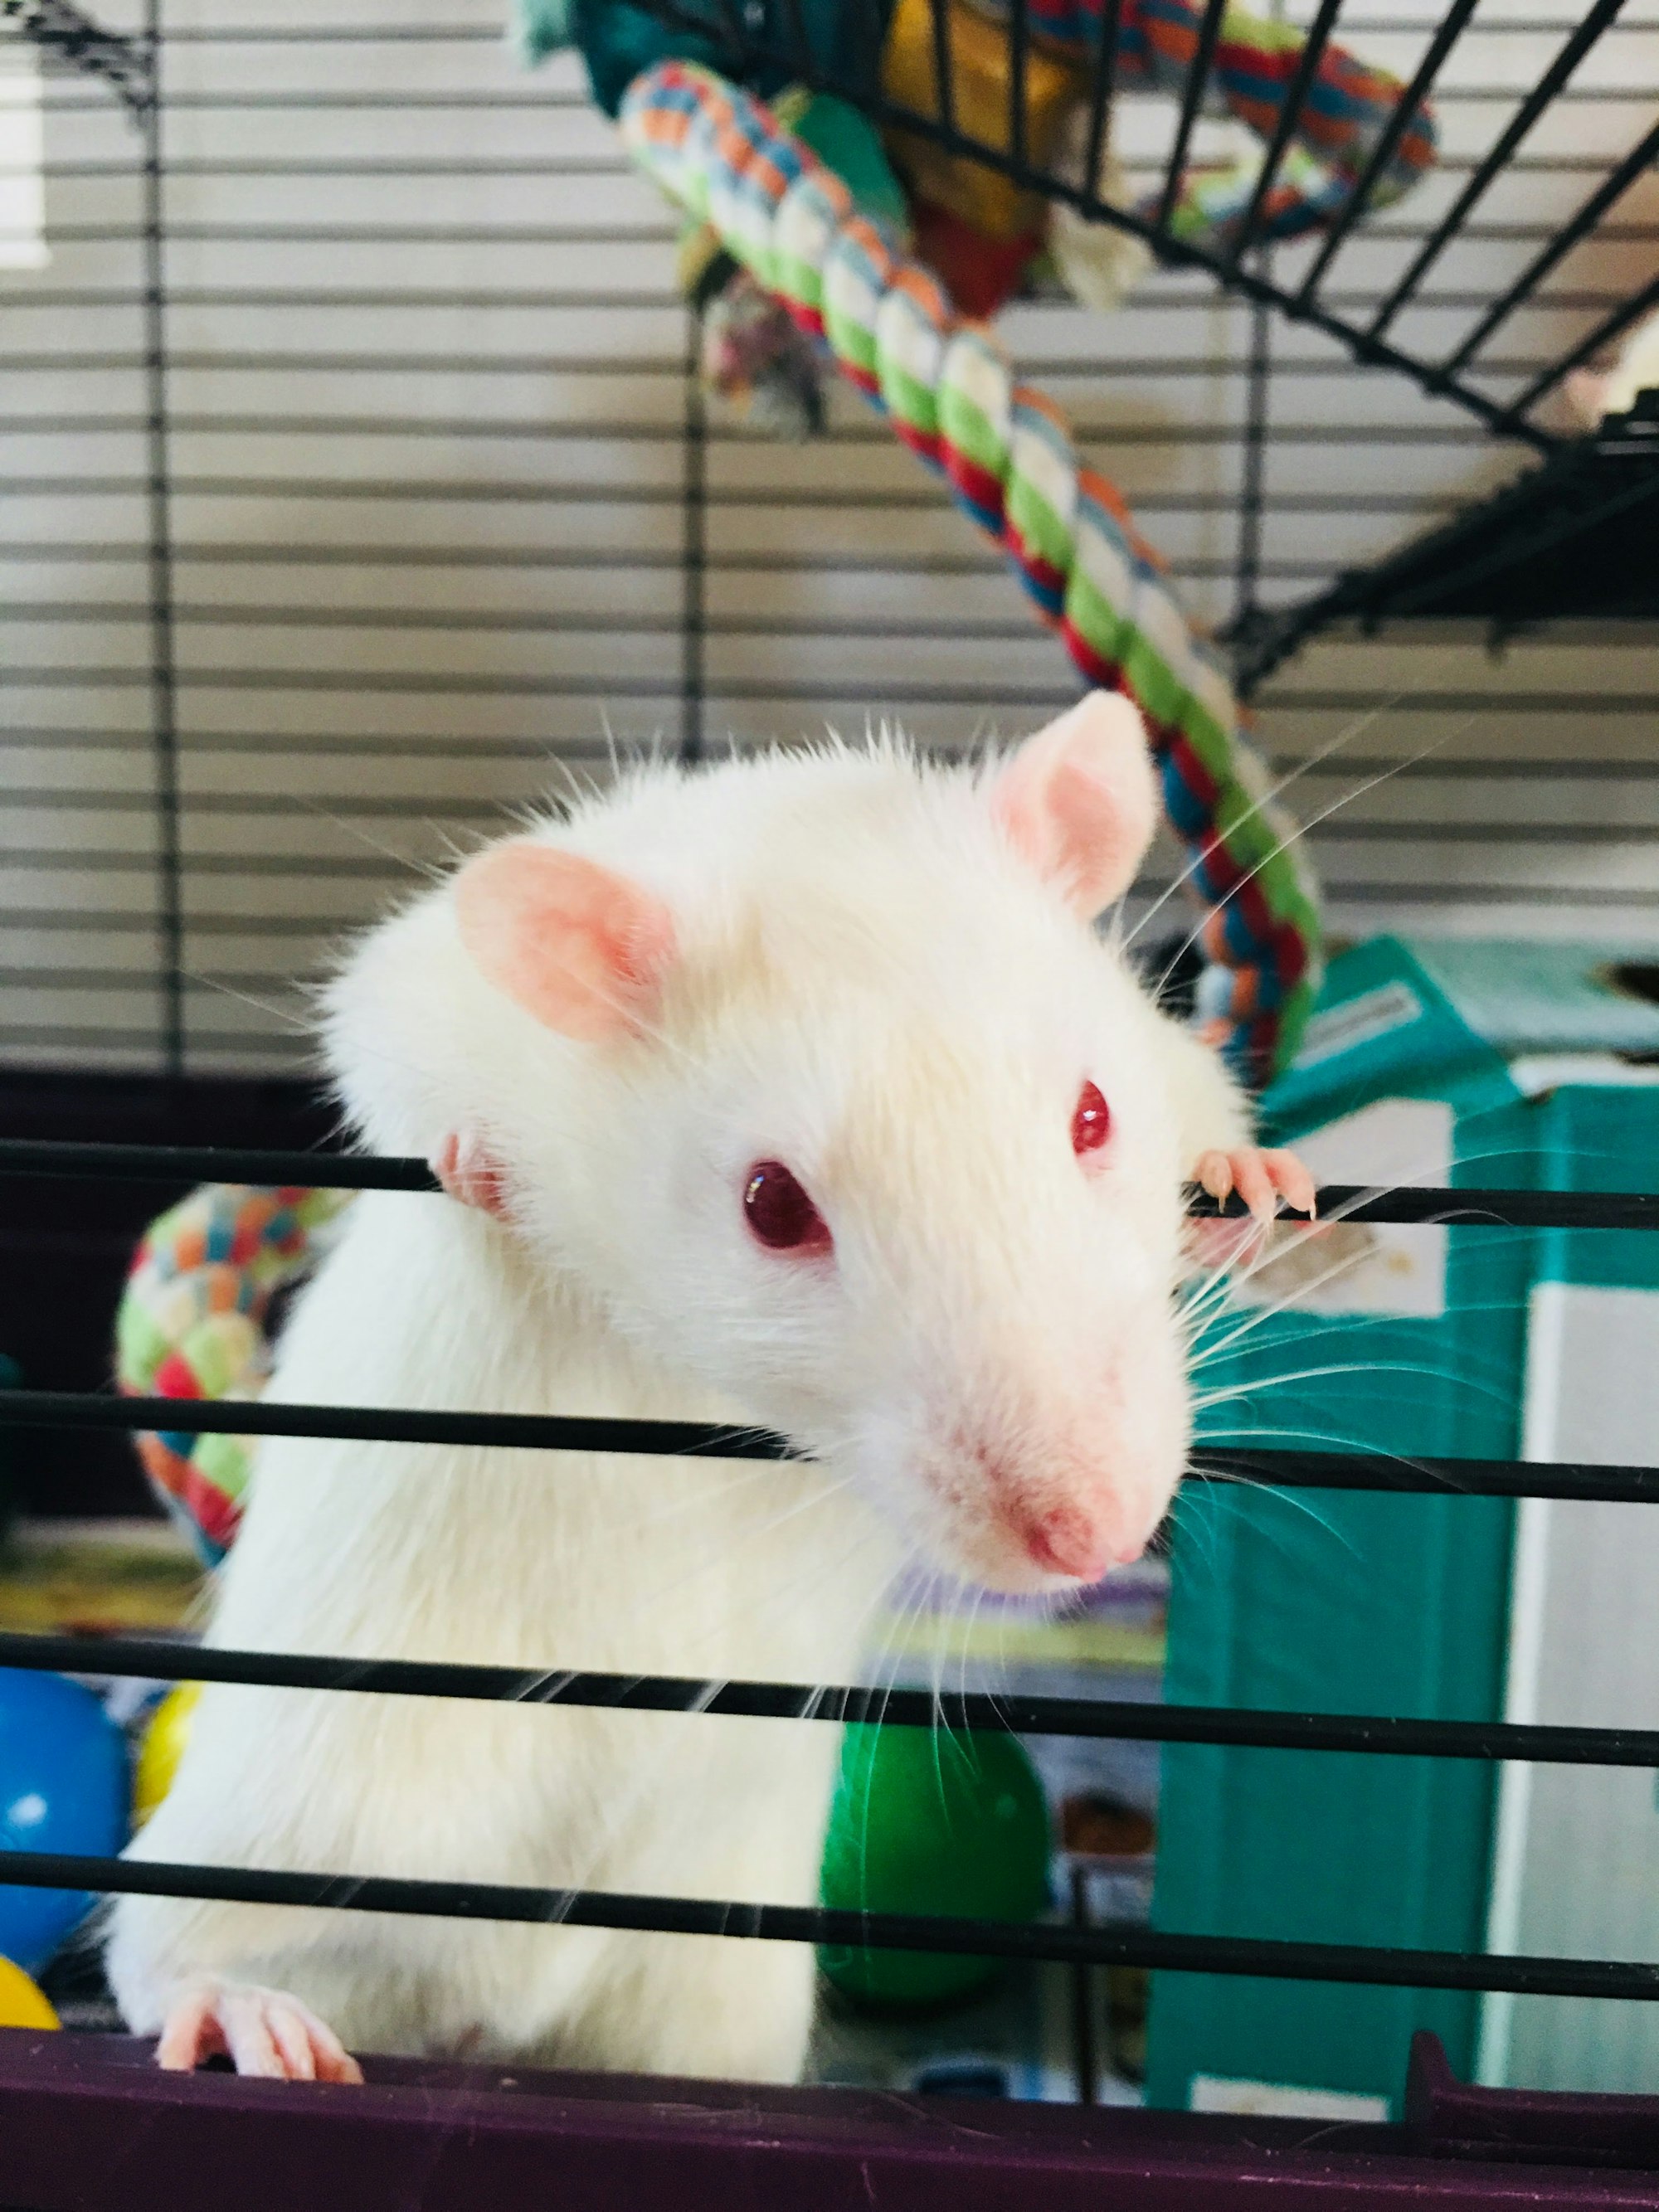 An image of a curious little pet rat